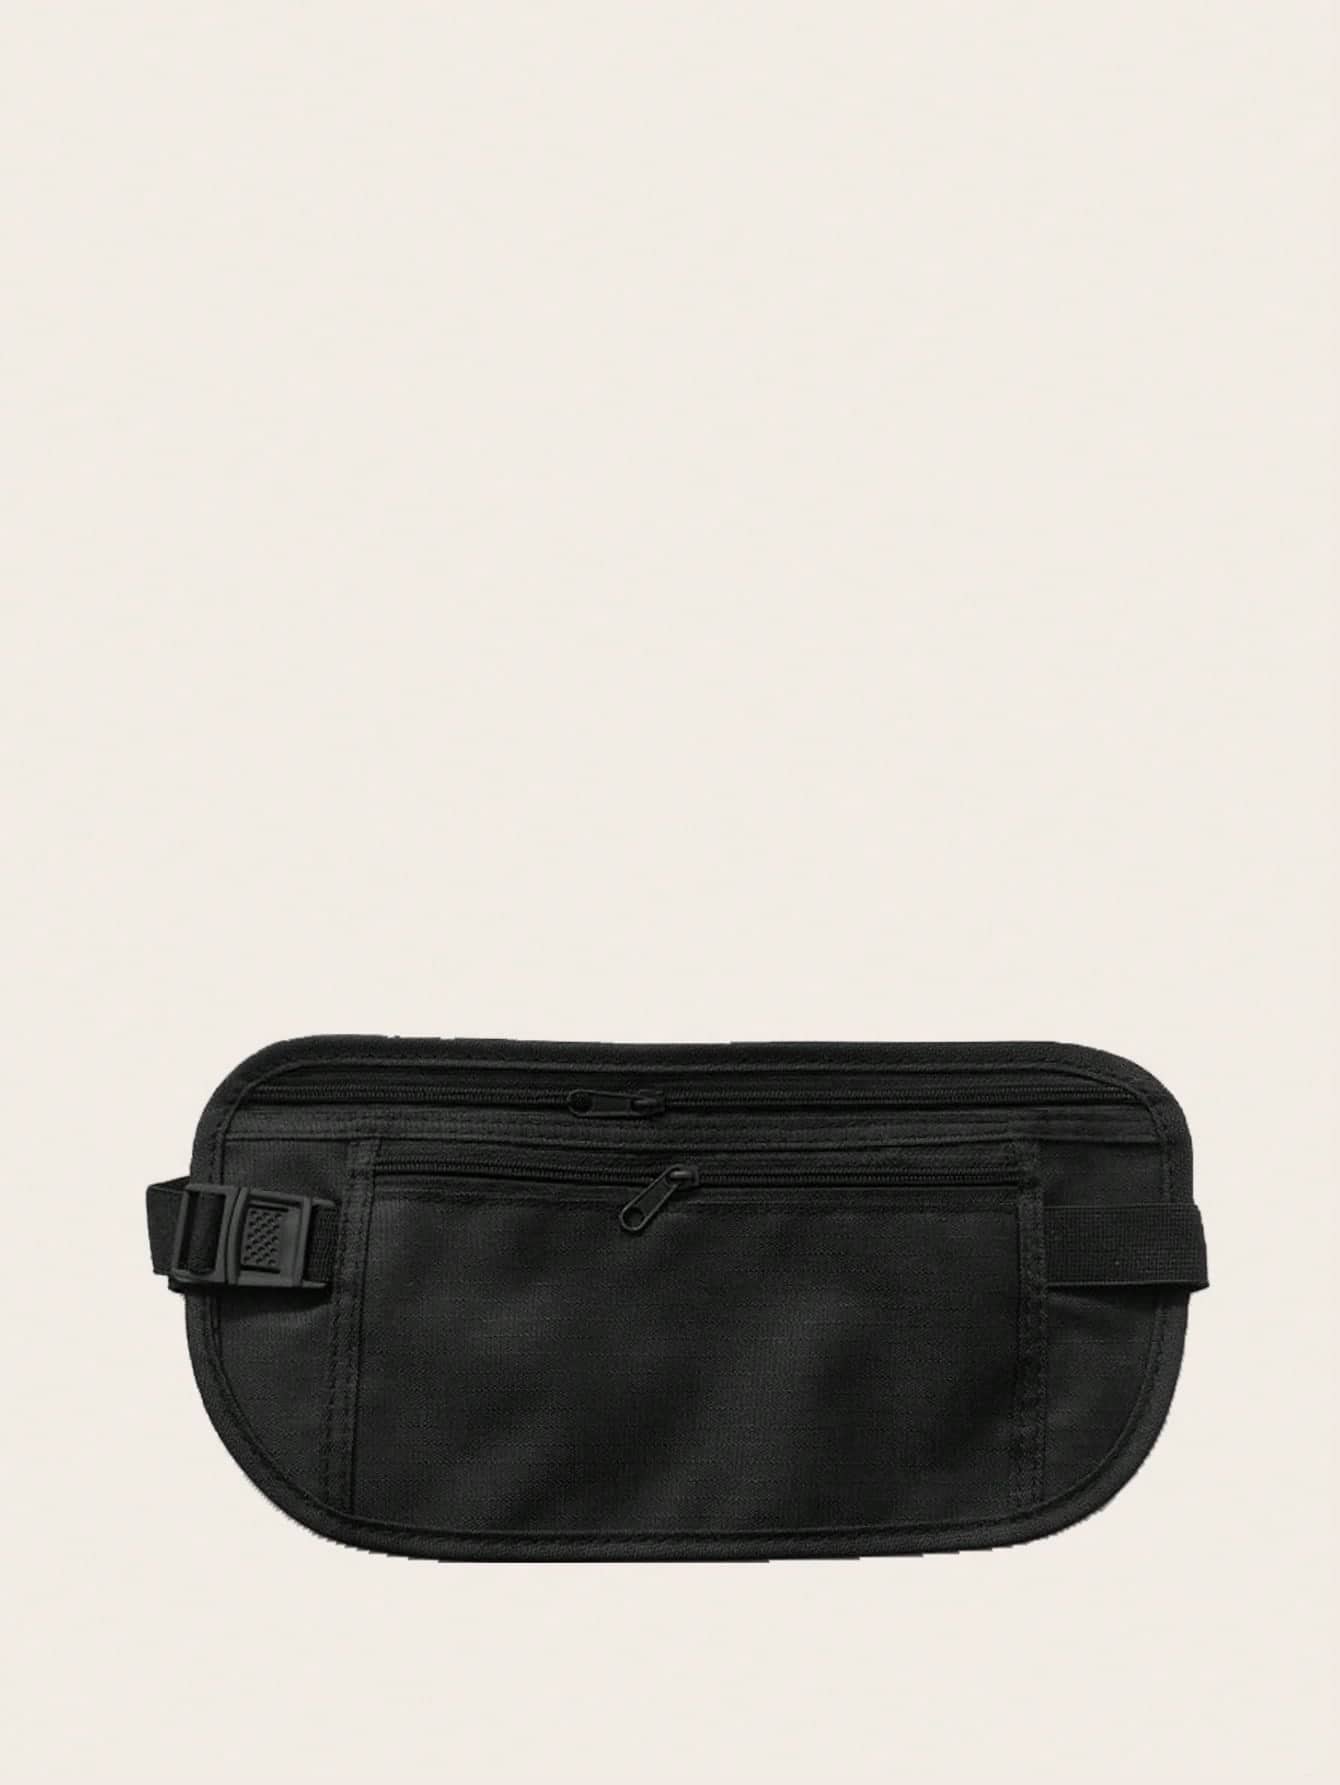 Тканевая поясная сумка, черный поясная сумка для телефона с двумя карманами для бега поясная сумка спортивная дорожная поясная сумка для jogg